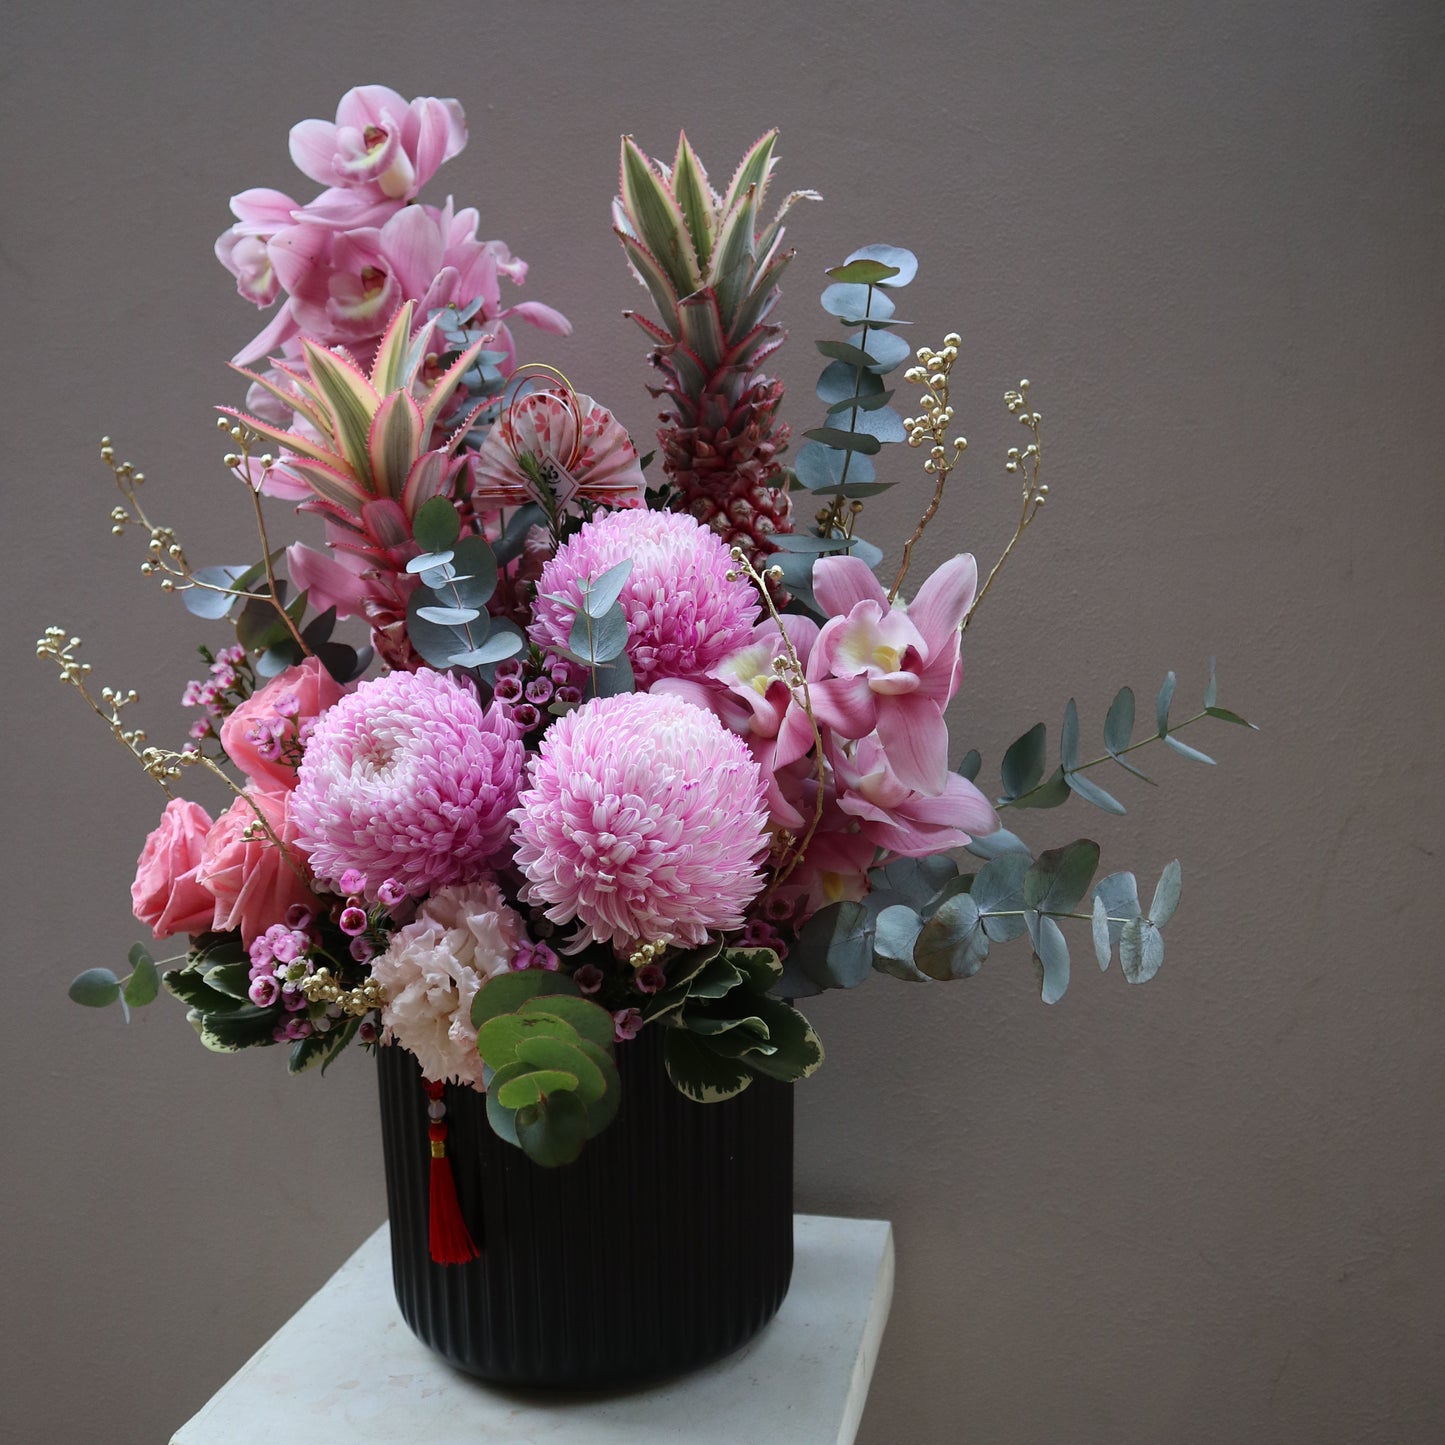 CNY Flower Arrangement - "Happiness"